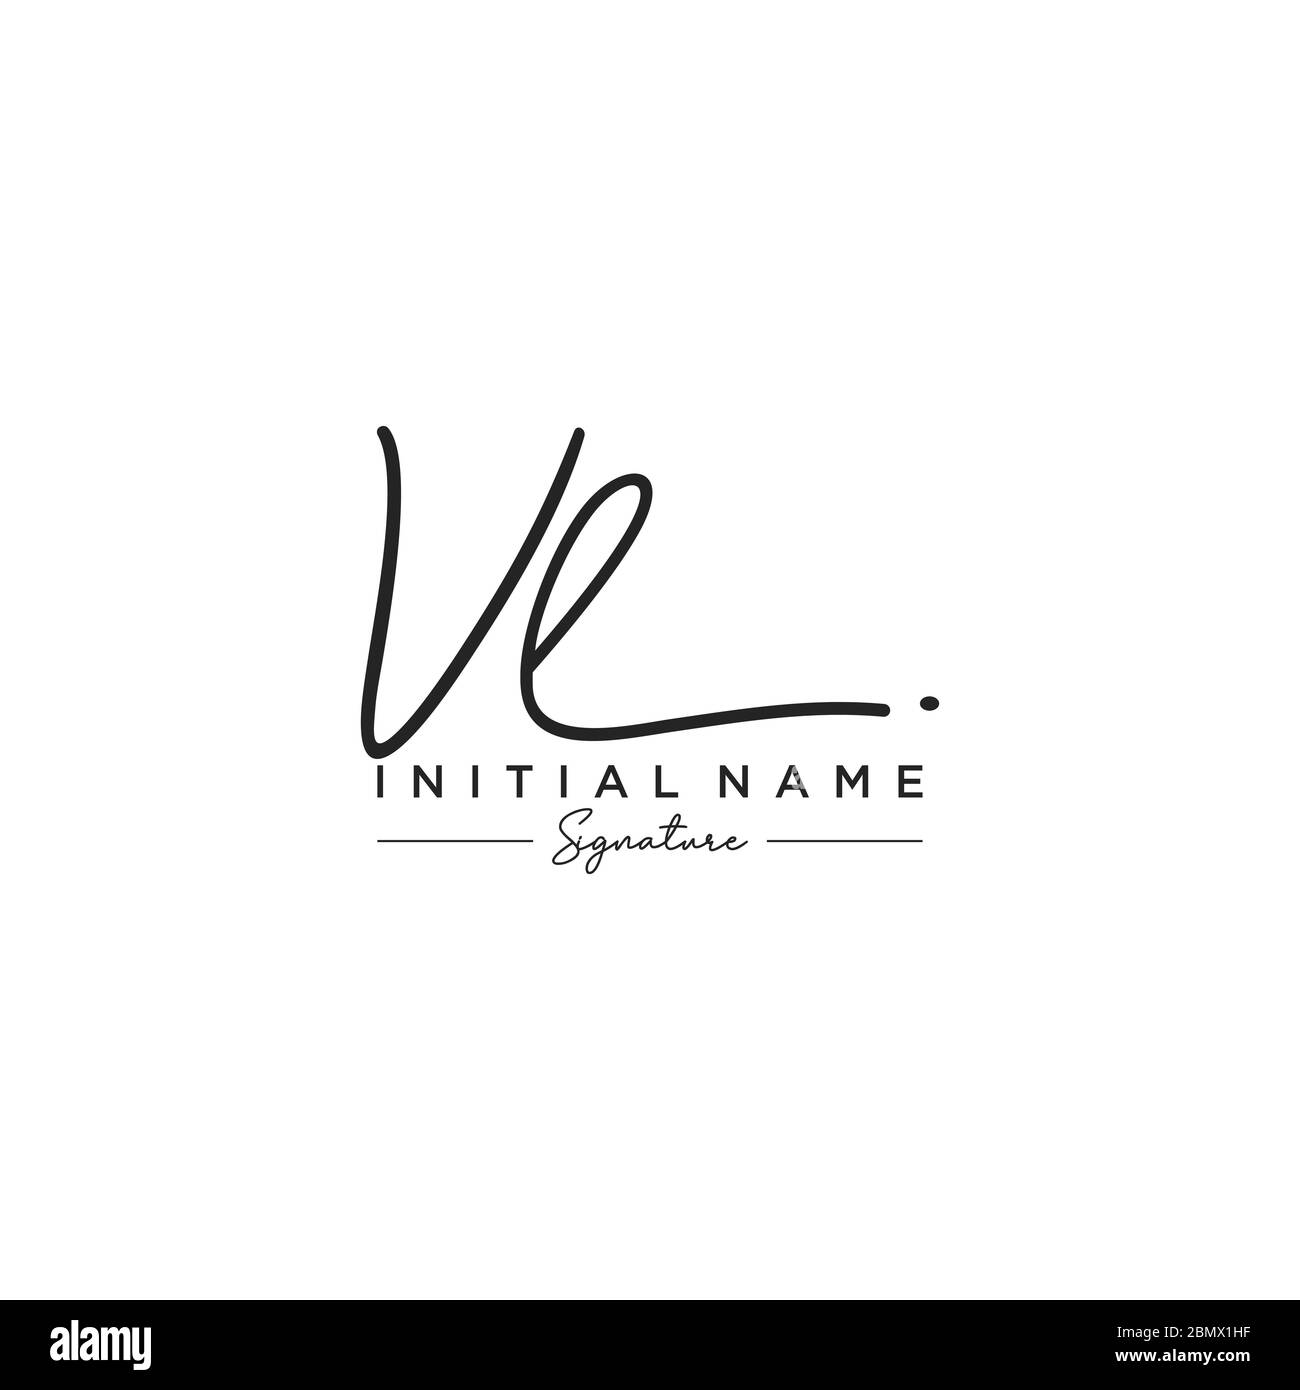 V L Logo Stock Vector Illustration and Royalty Free V L Logo Clipart